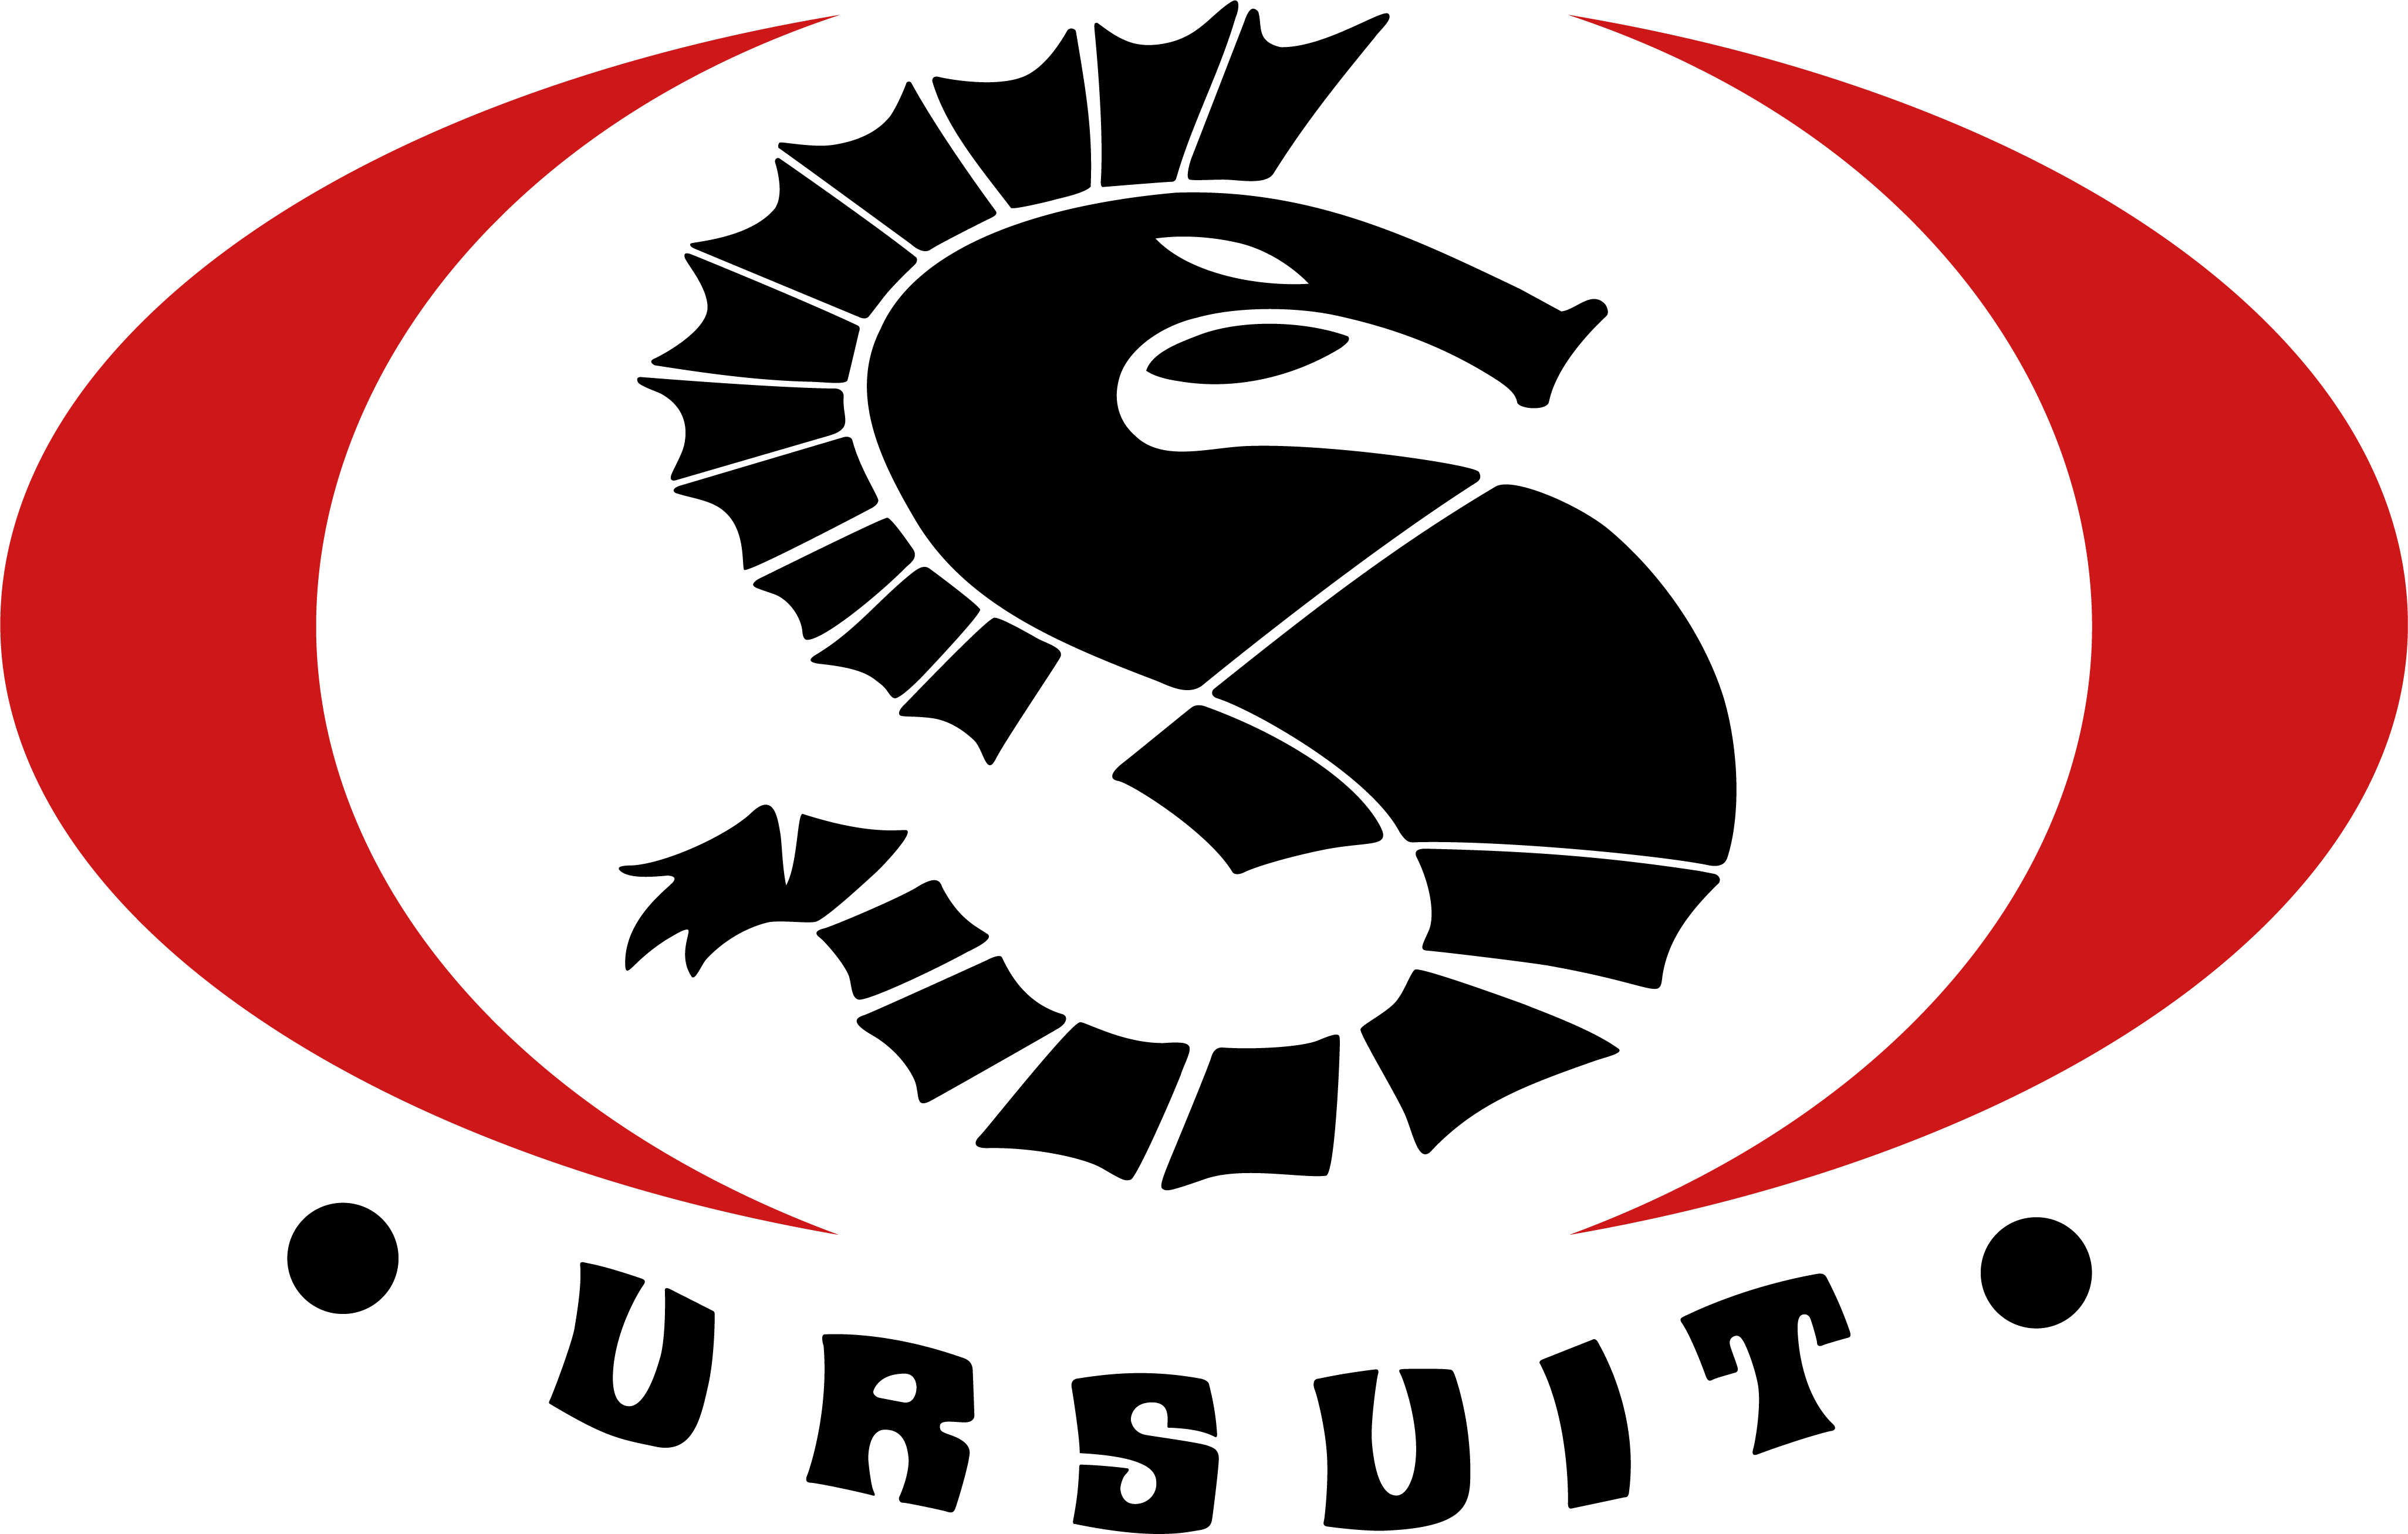 Ursuit Logo